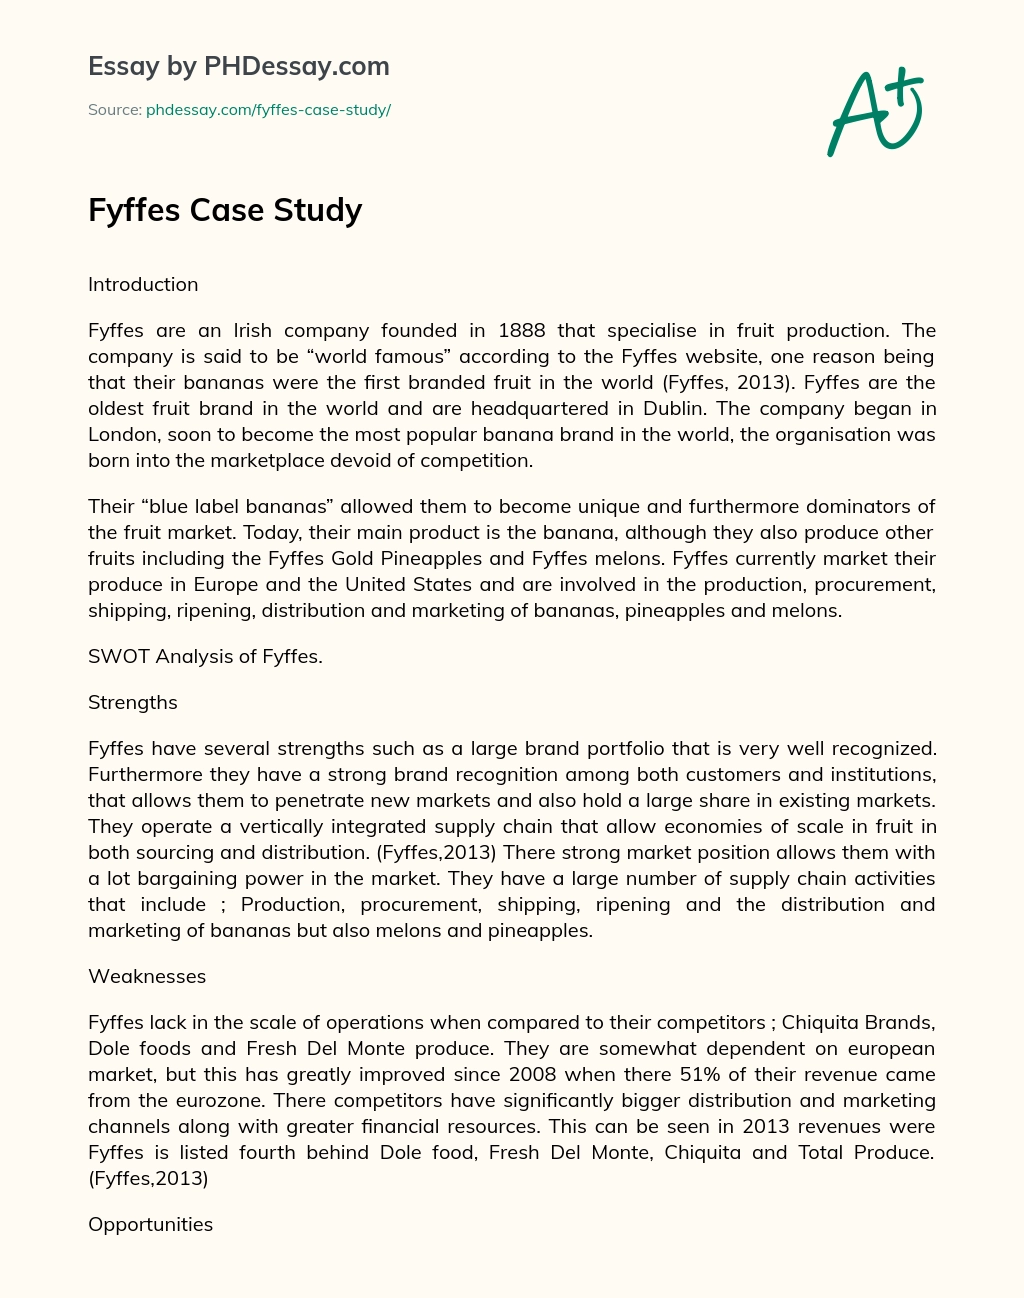 Fyffes Case Study essay